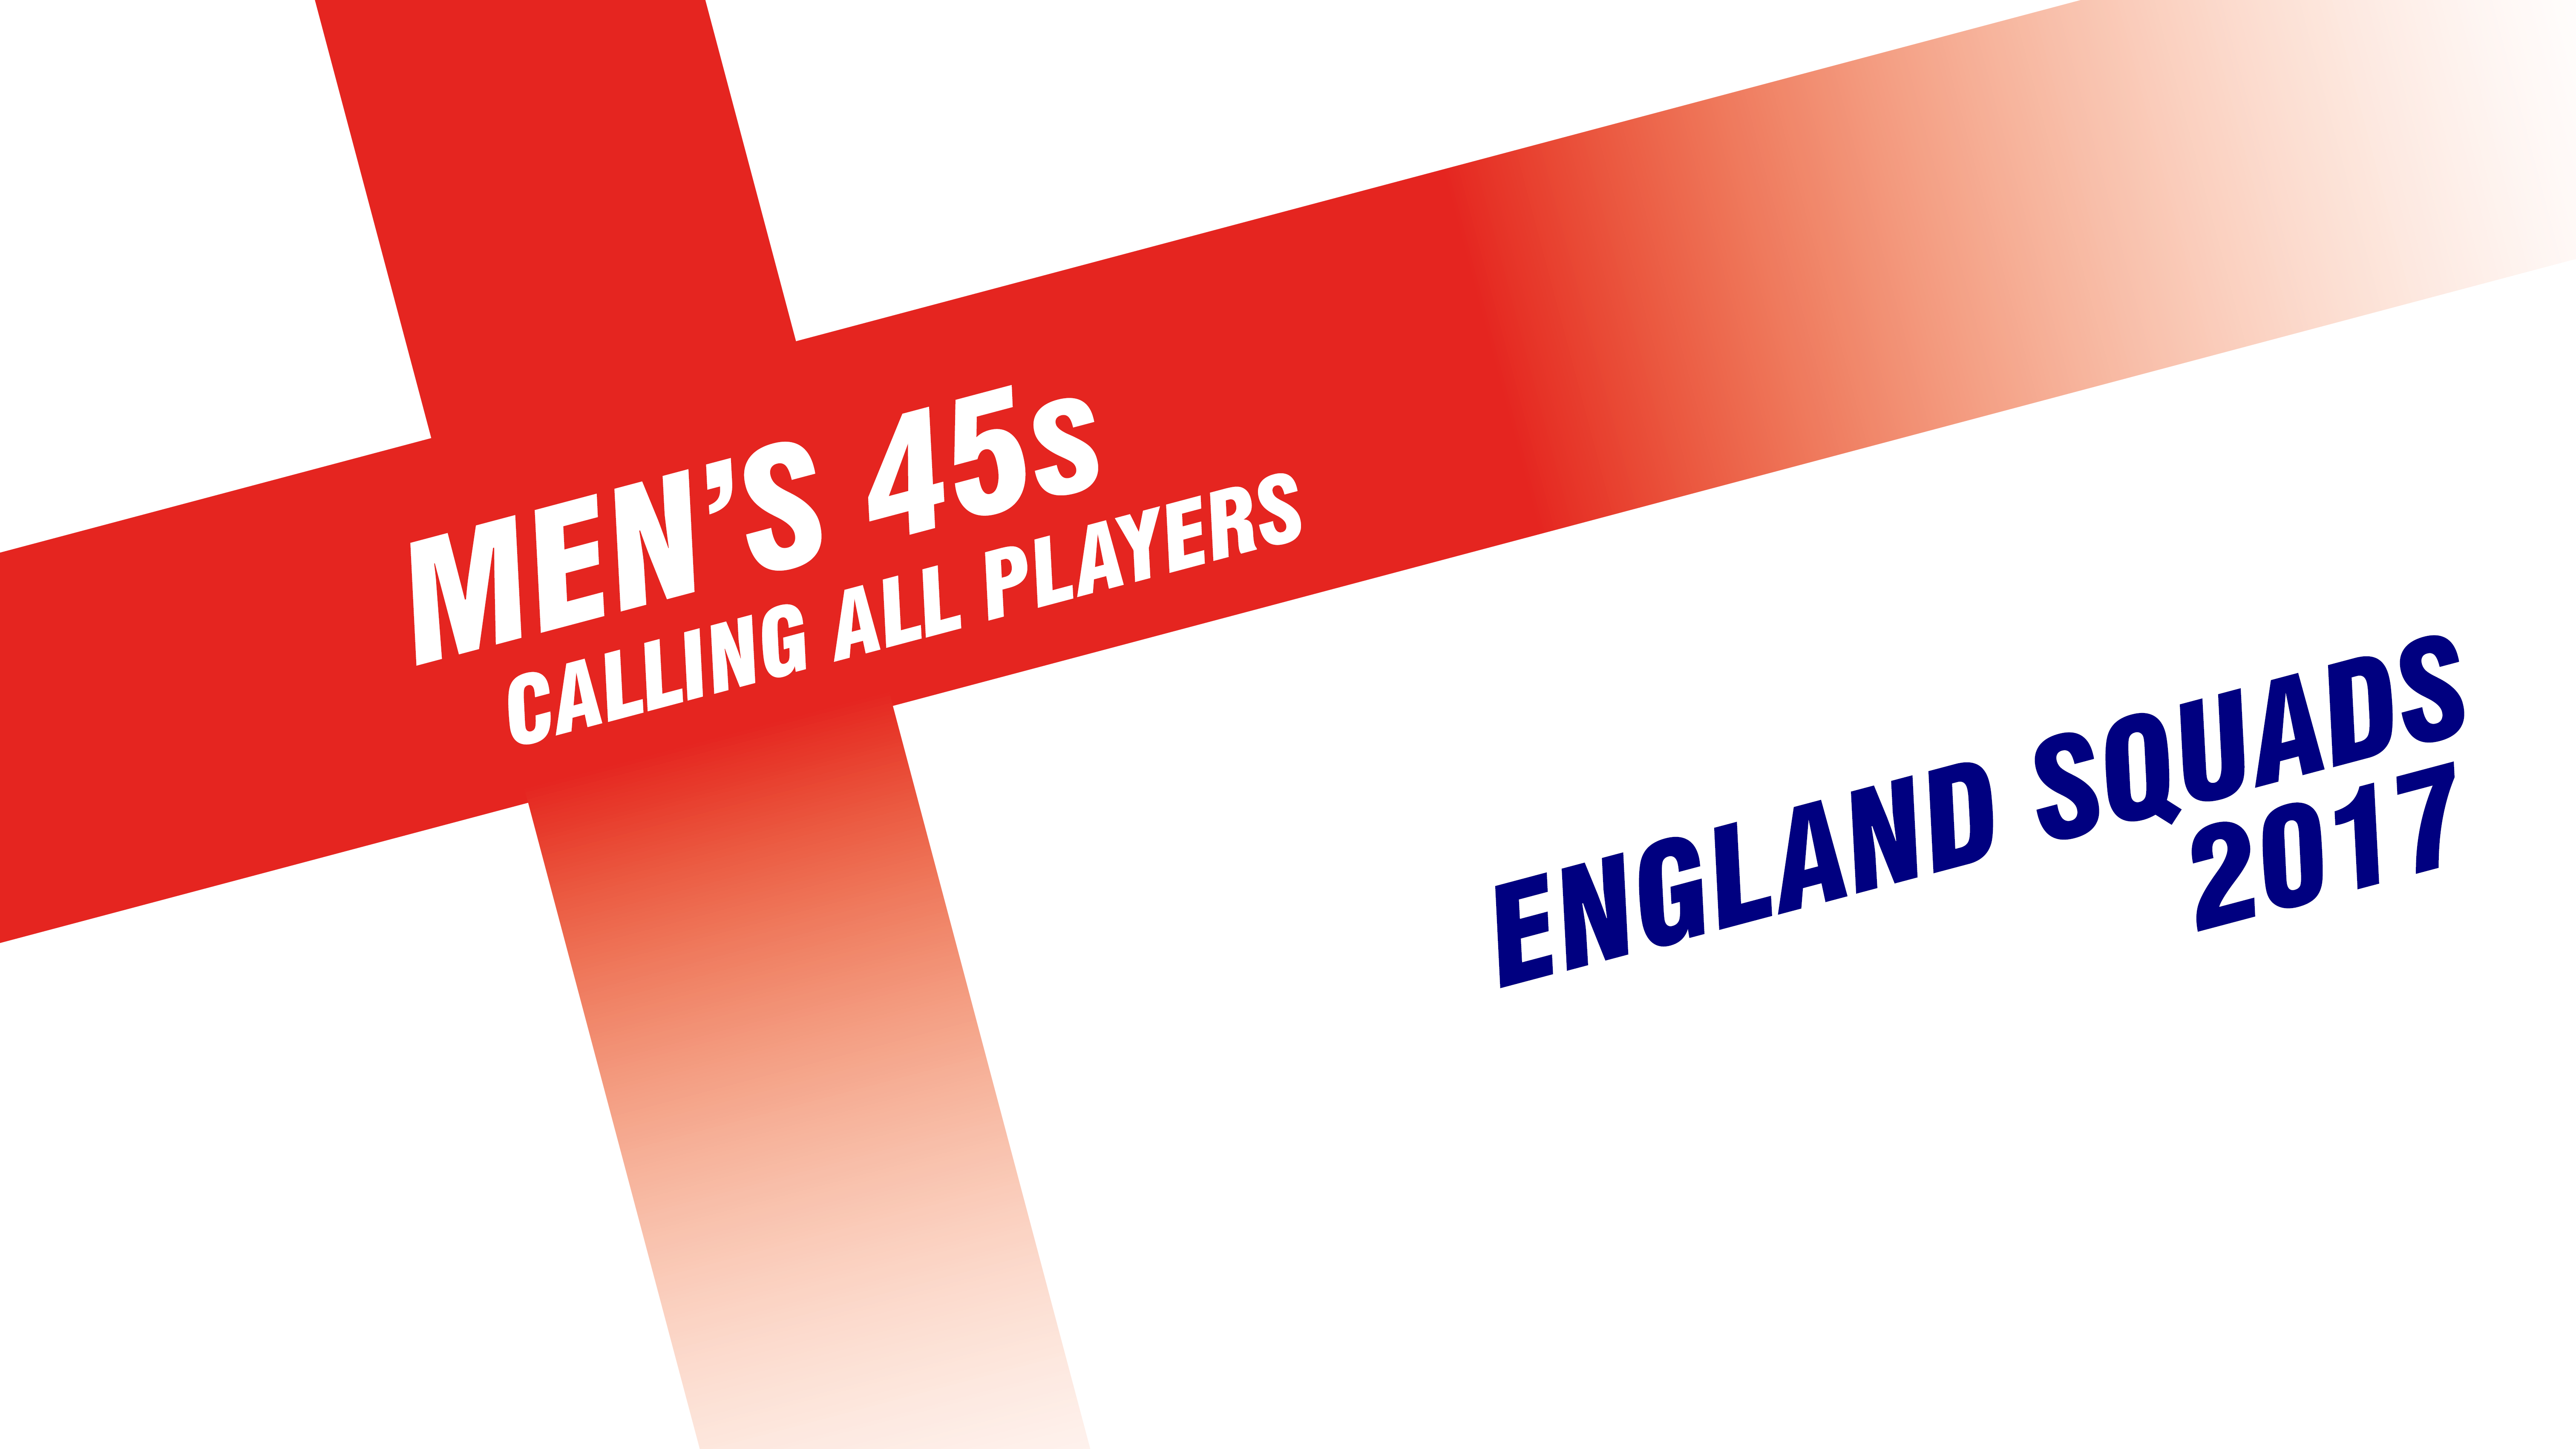 England Men's 45s | An update for 2017